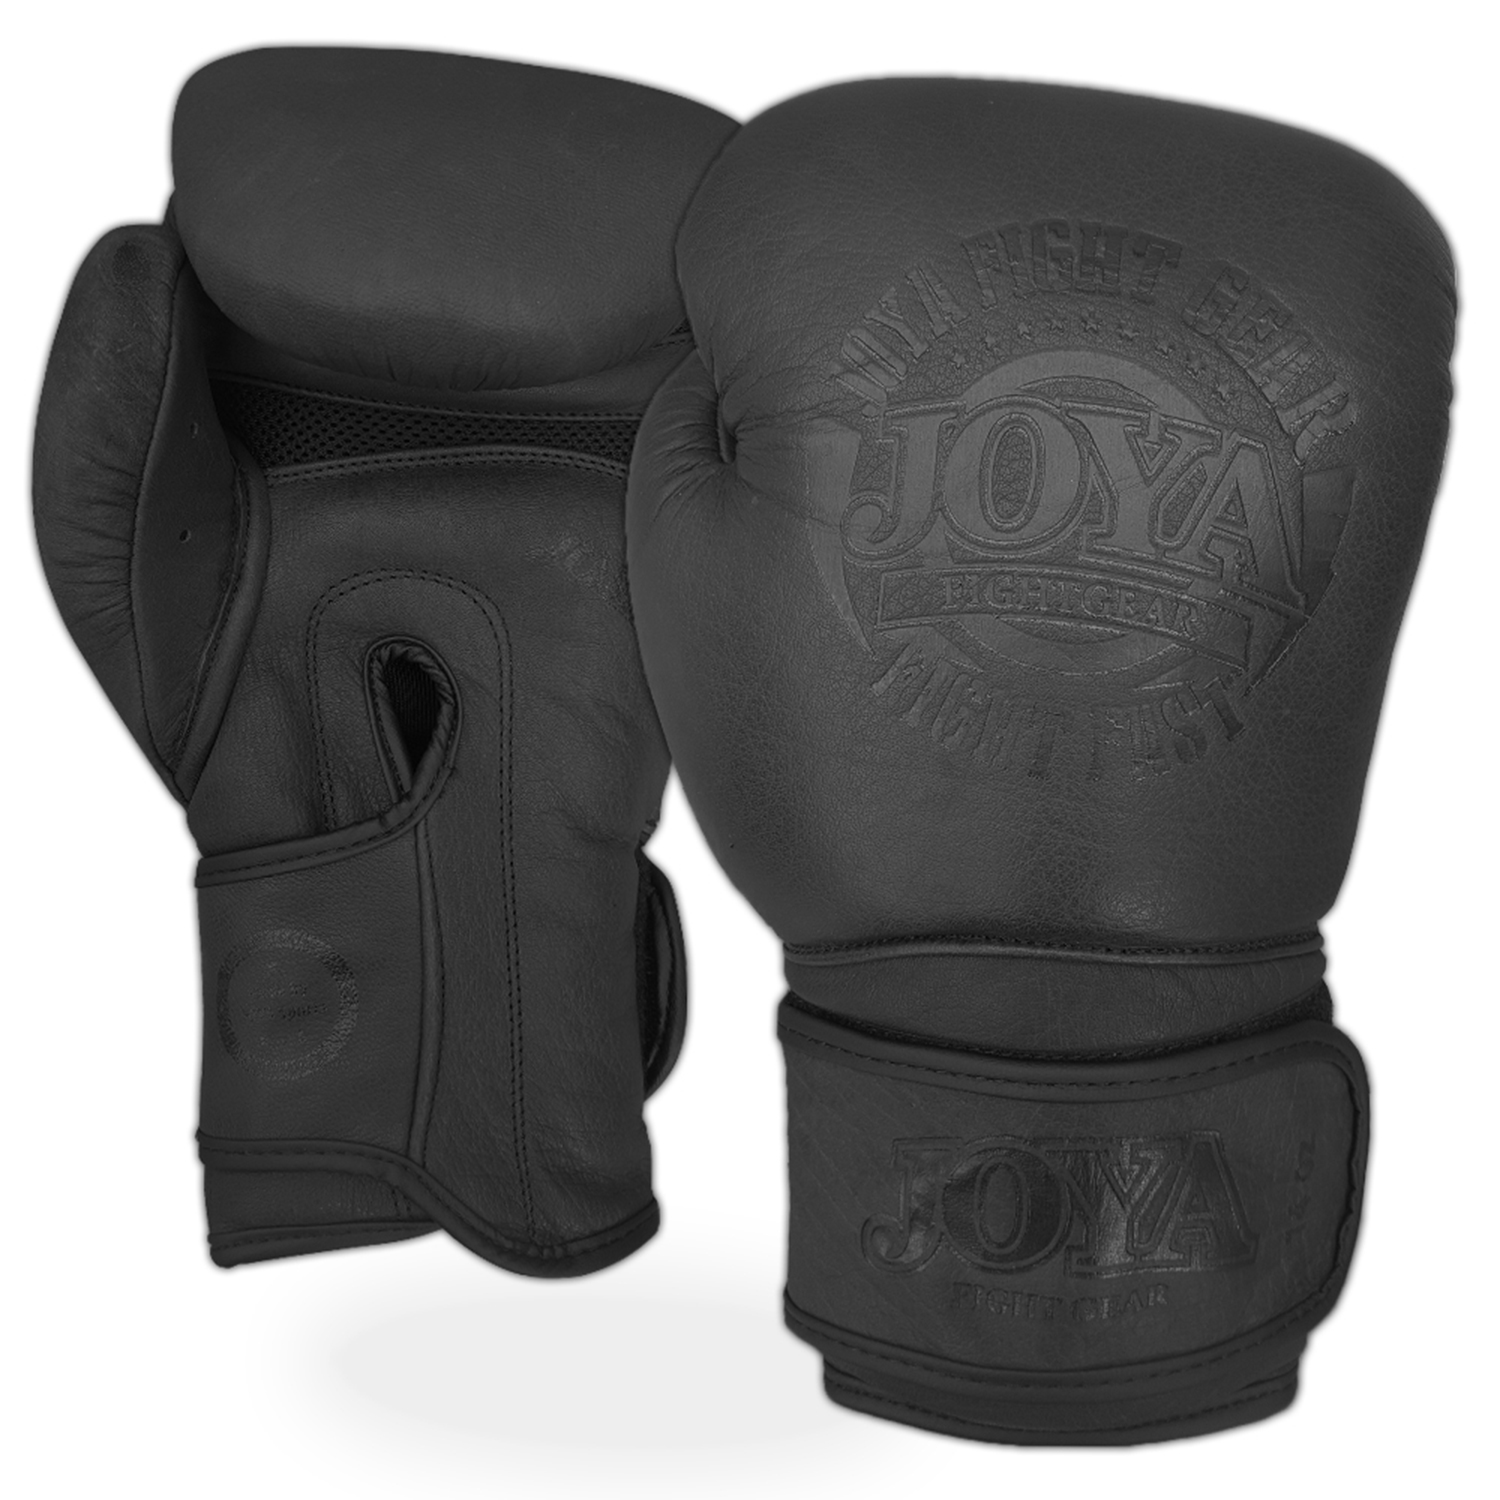 Joya Fight Fast boxing gloves black 16 oz